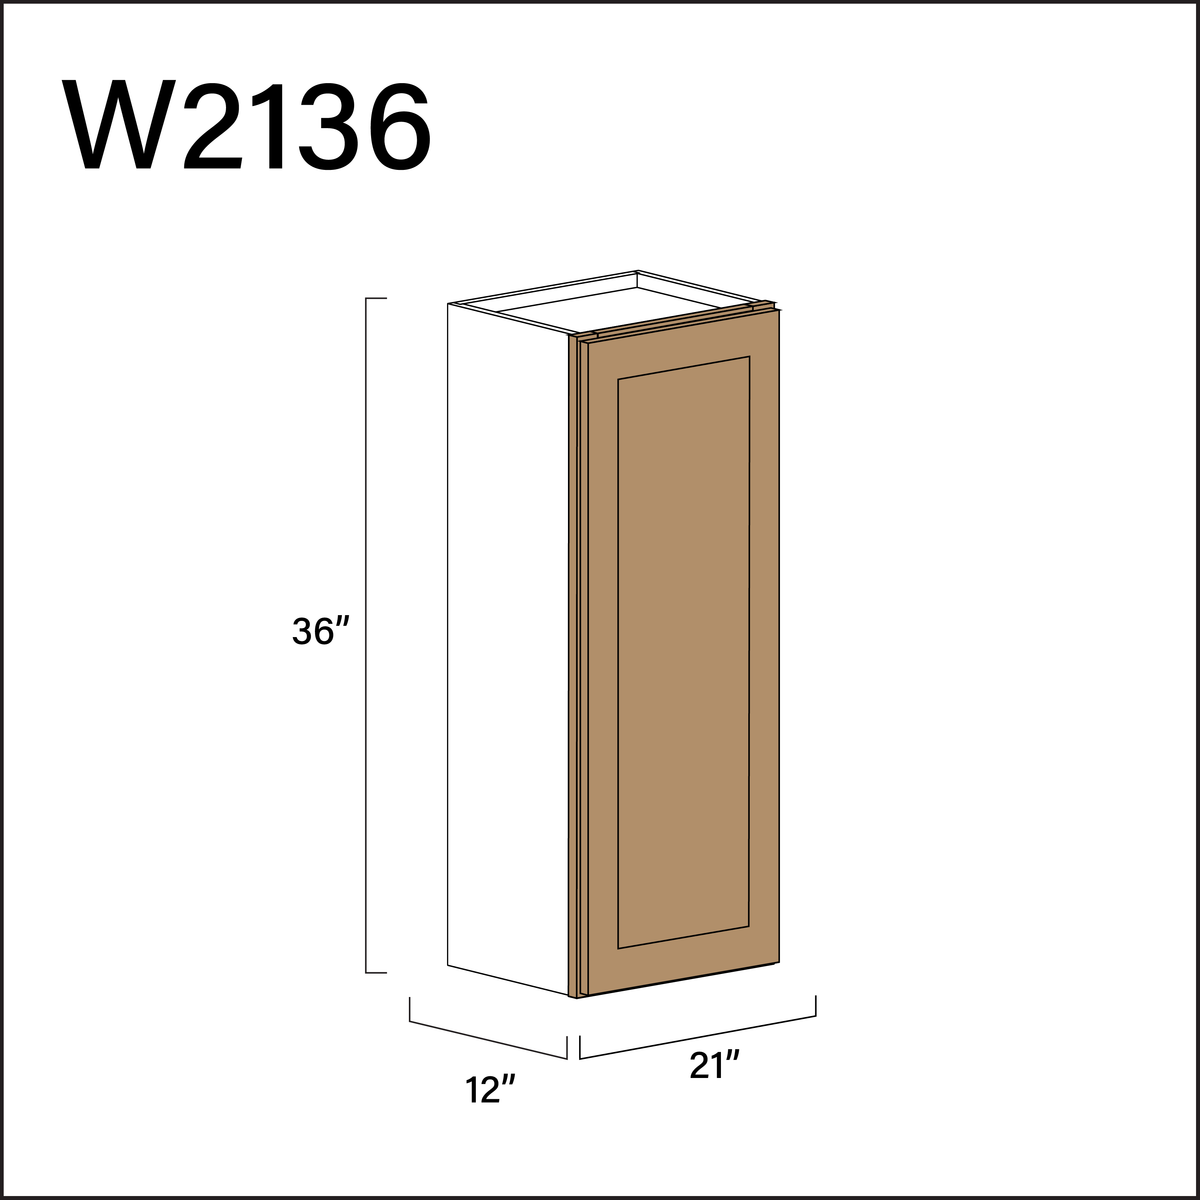 Alton Iced Mocha Single Door Wall Cabinet - 21" W x 36" H x 12" D